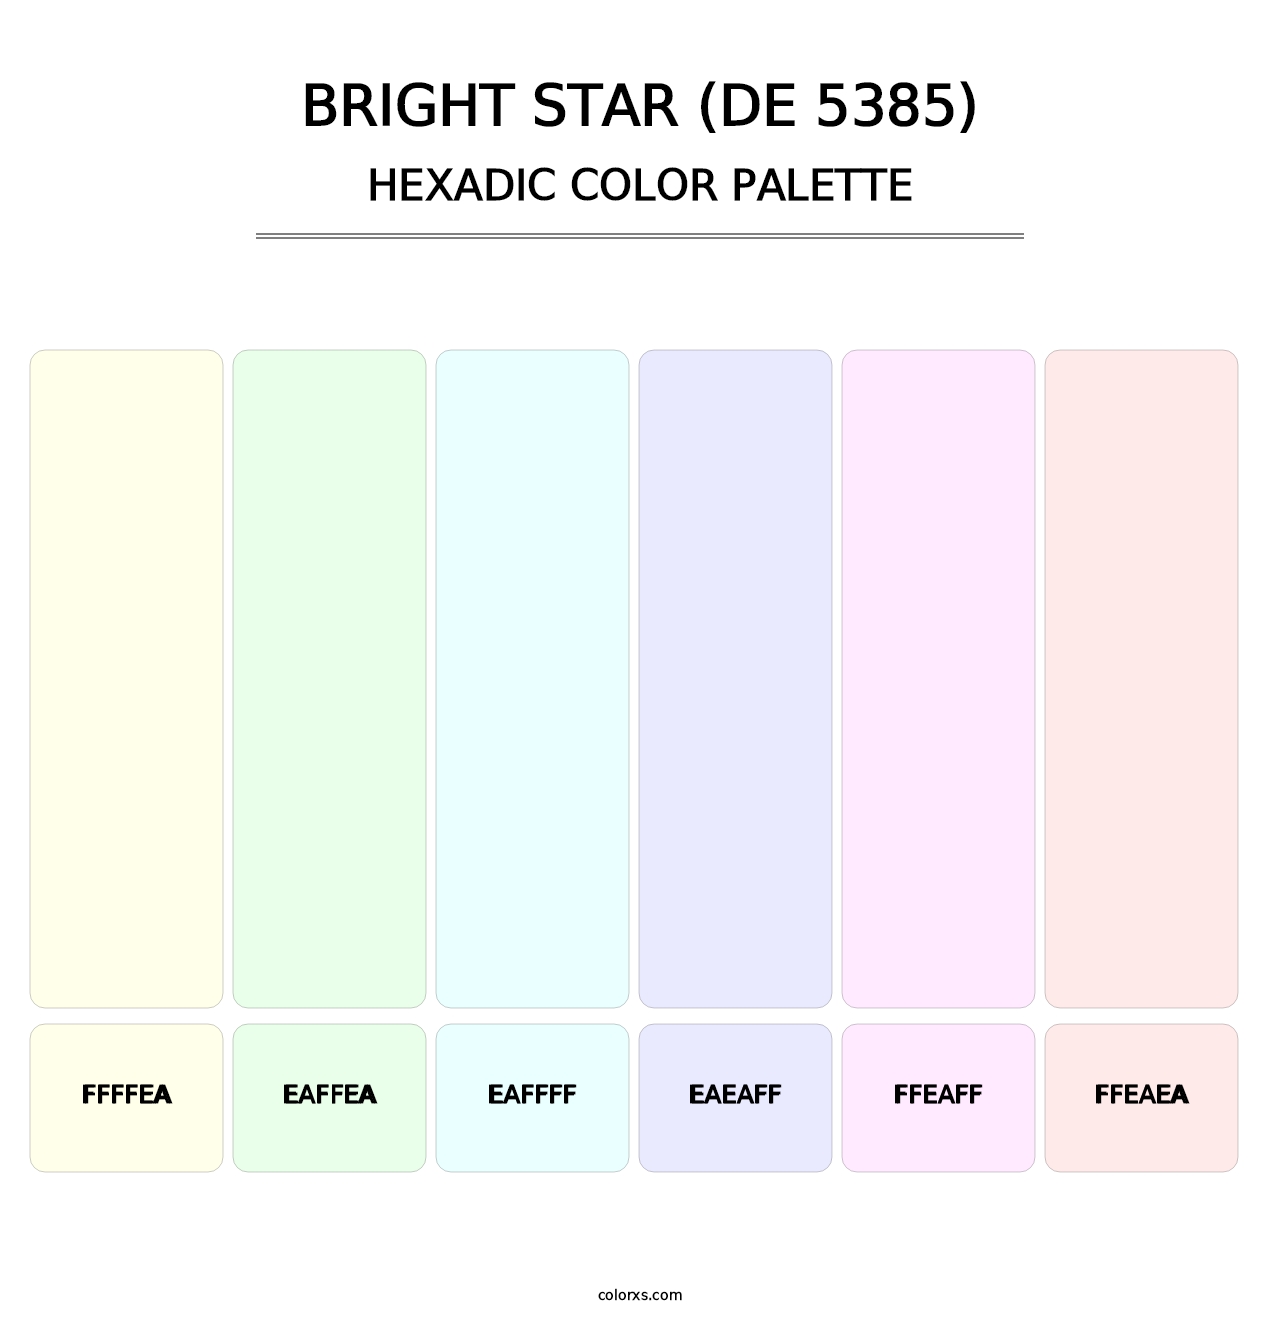 Bright Star (DE 5385) - Hexadic Color Palette